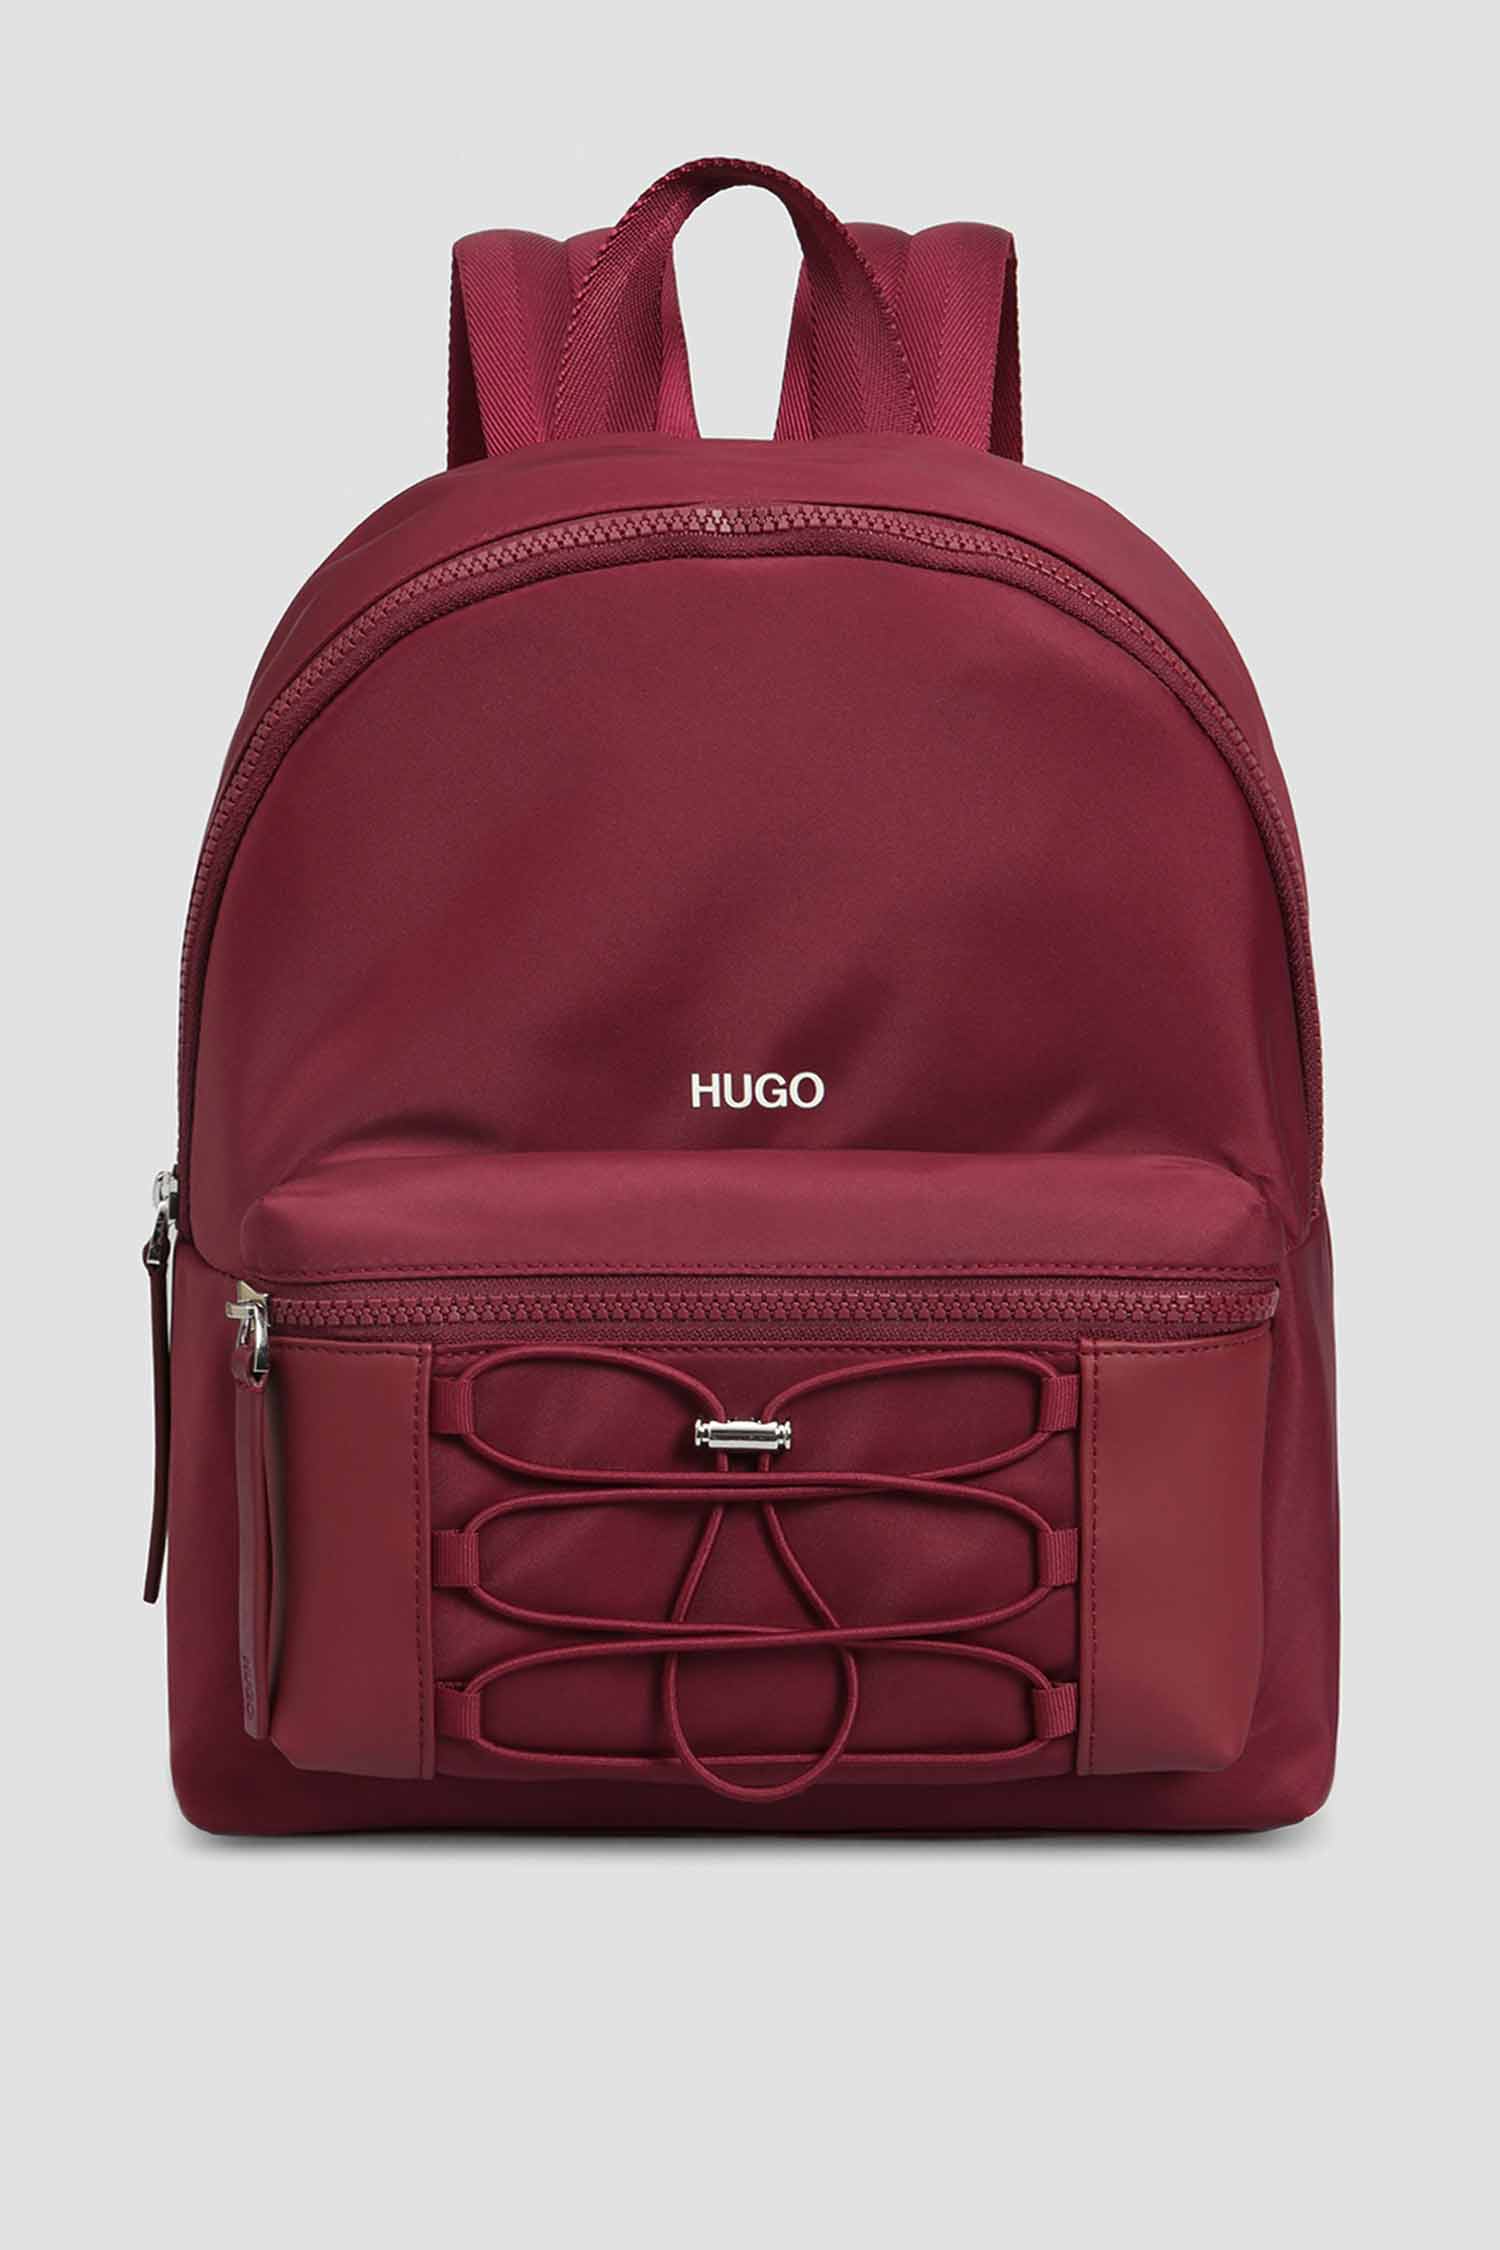 Жіночий бордовий рюкзак HUGO 50441754;612